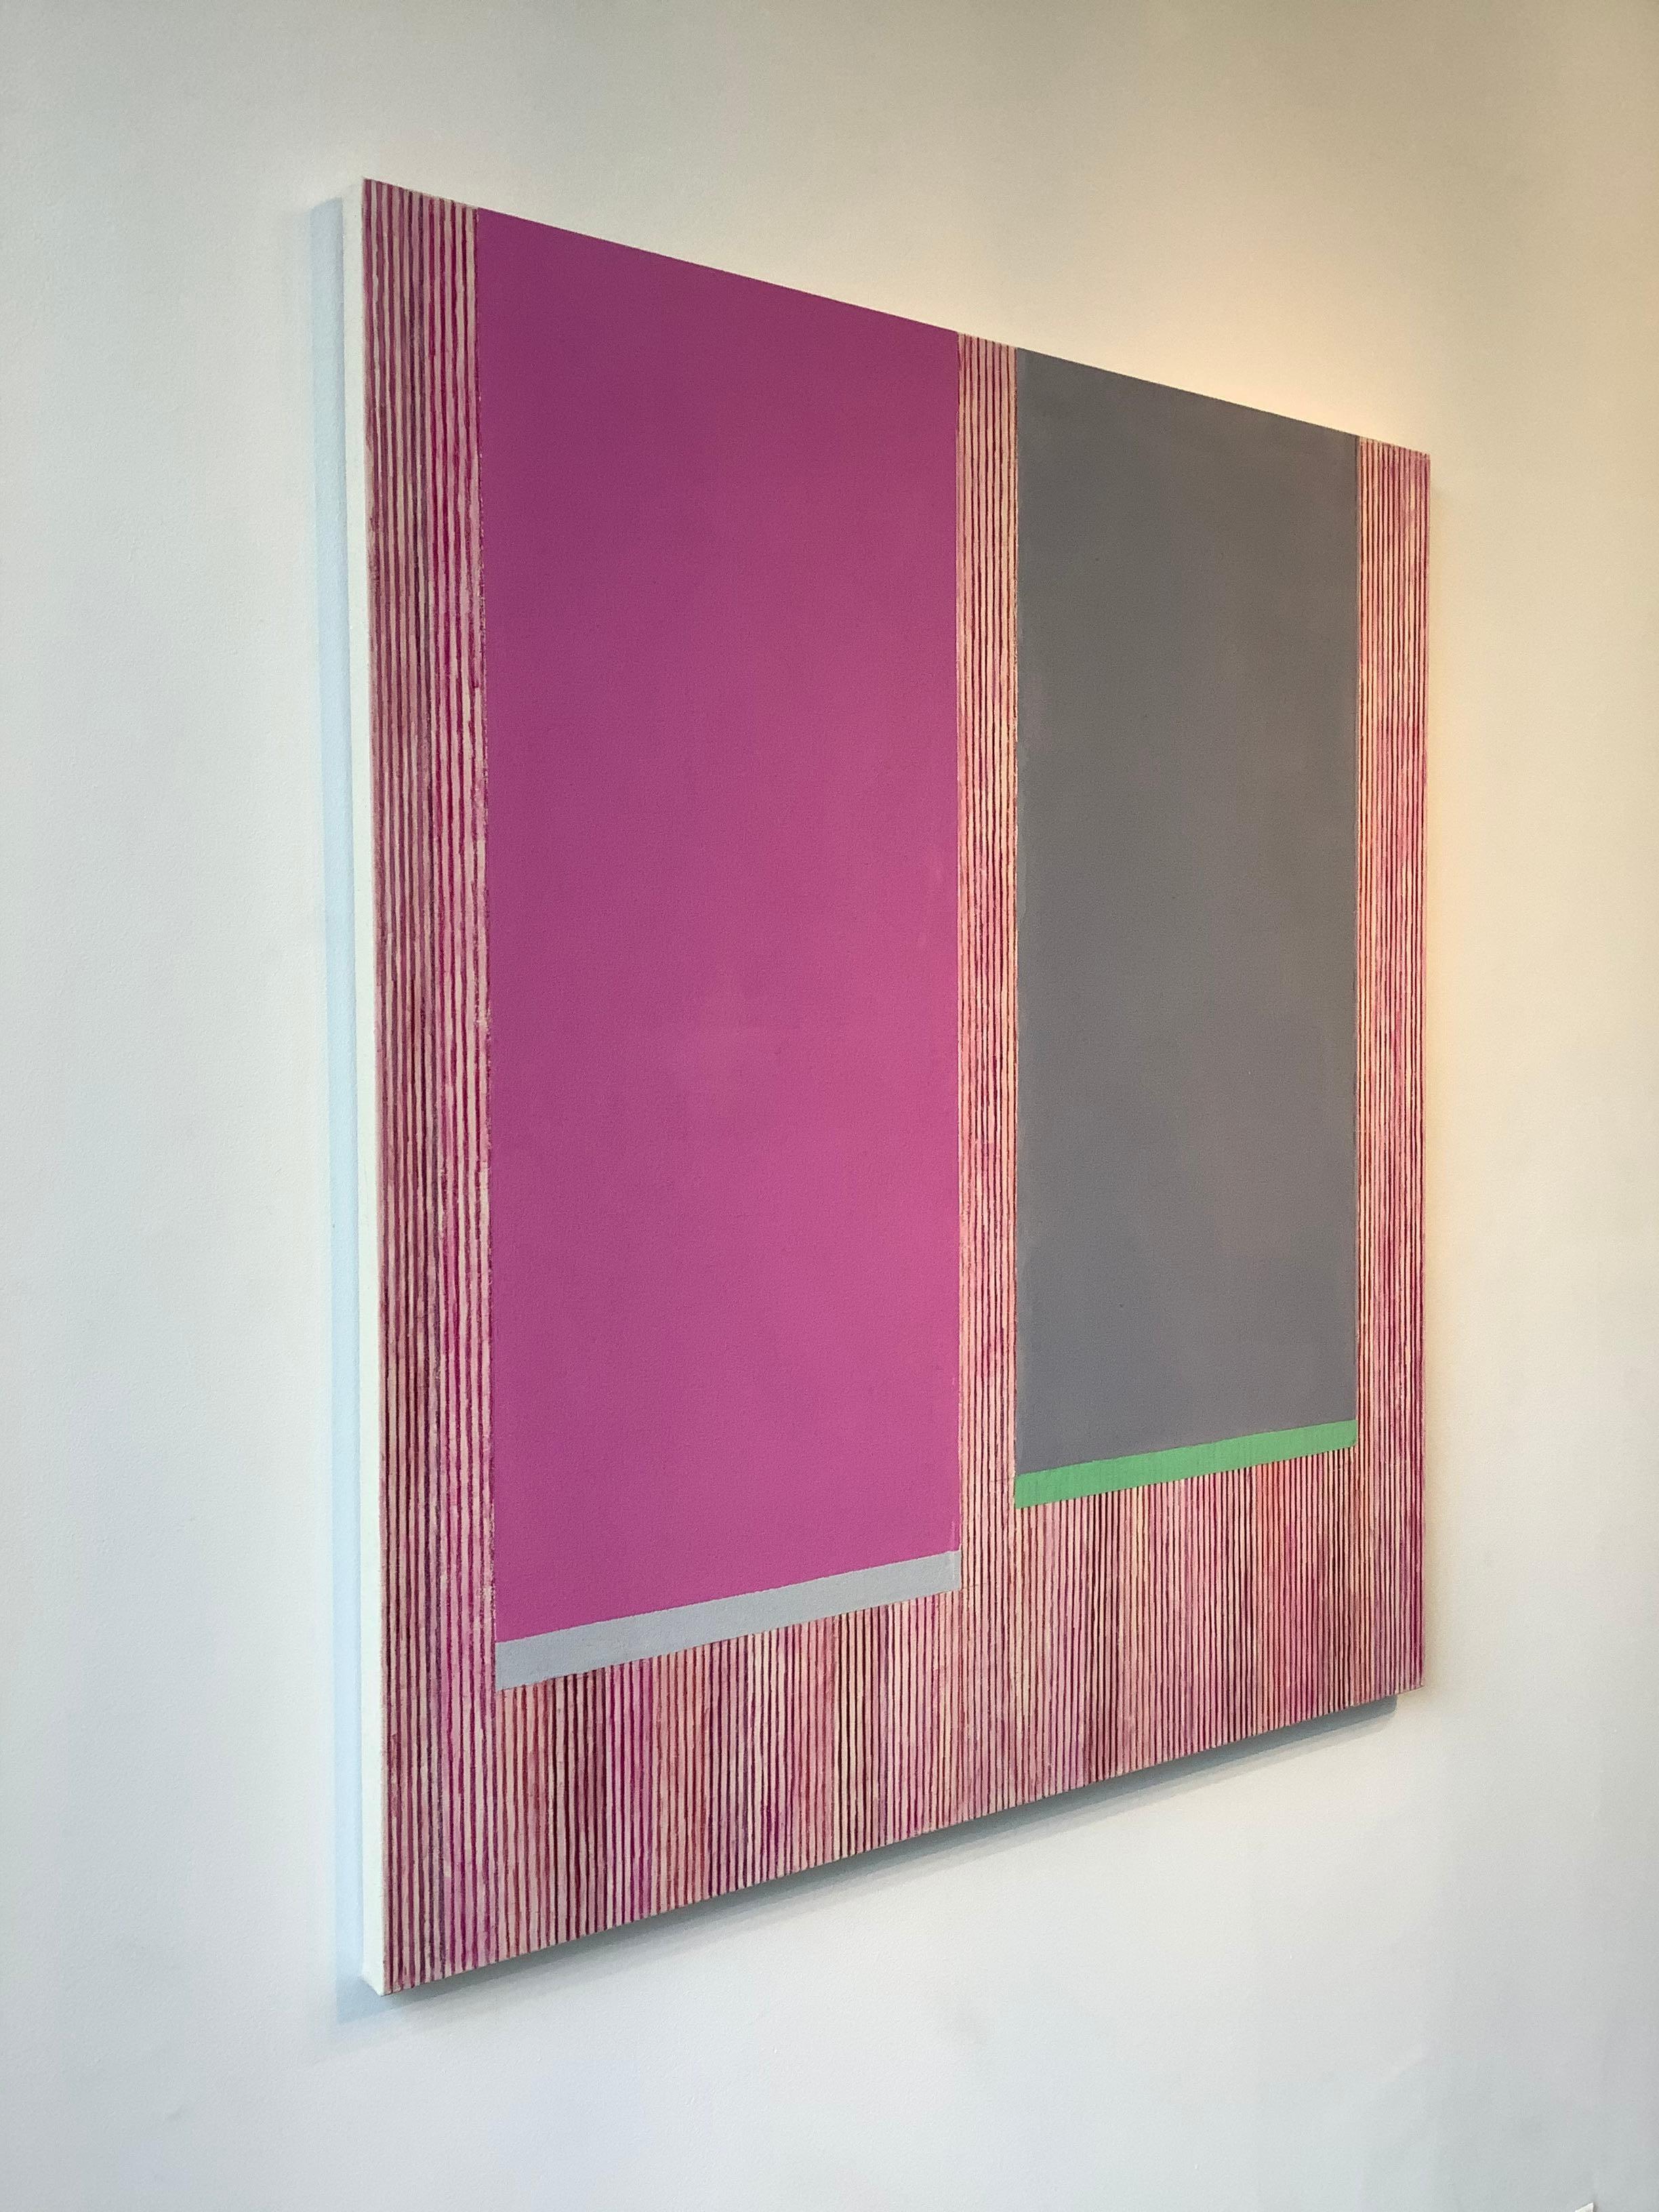 Geometrisches abstraktes Gemälde in Magentagrau B, Rosa, Grau, Grün, Rot gestreift 2